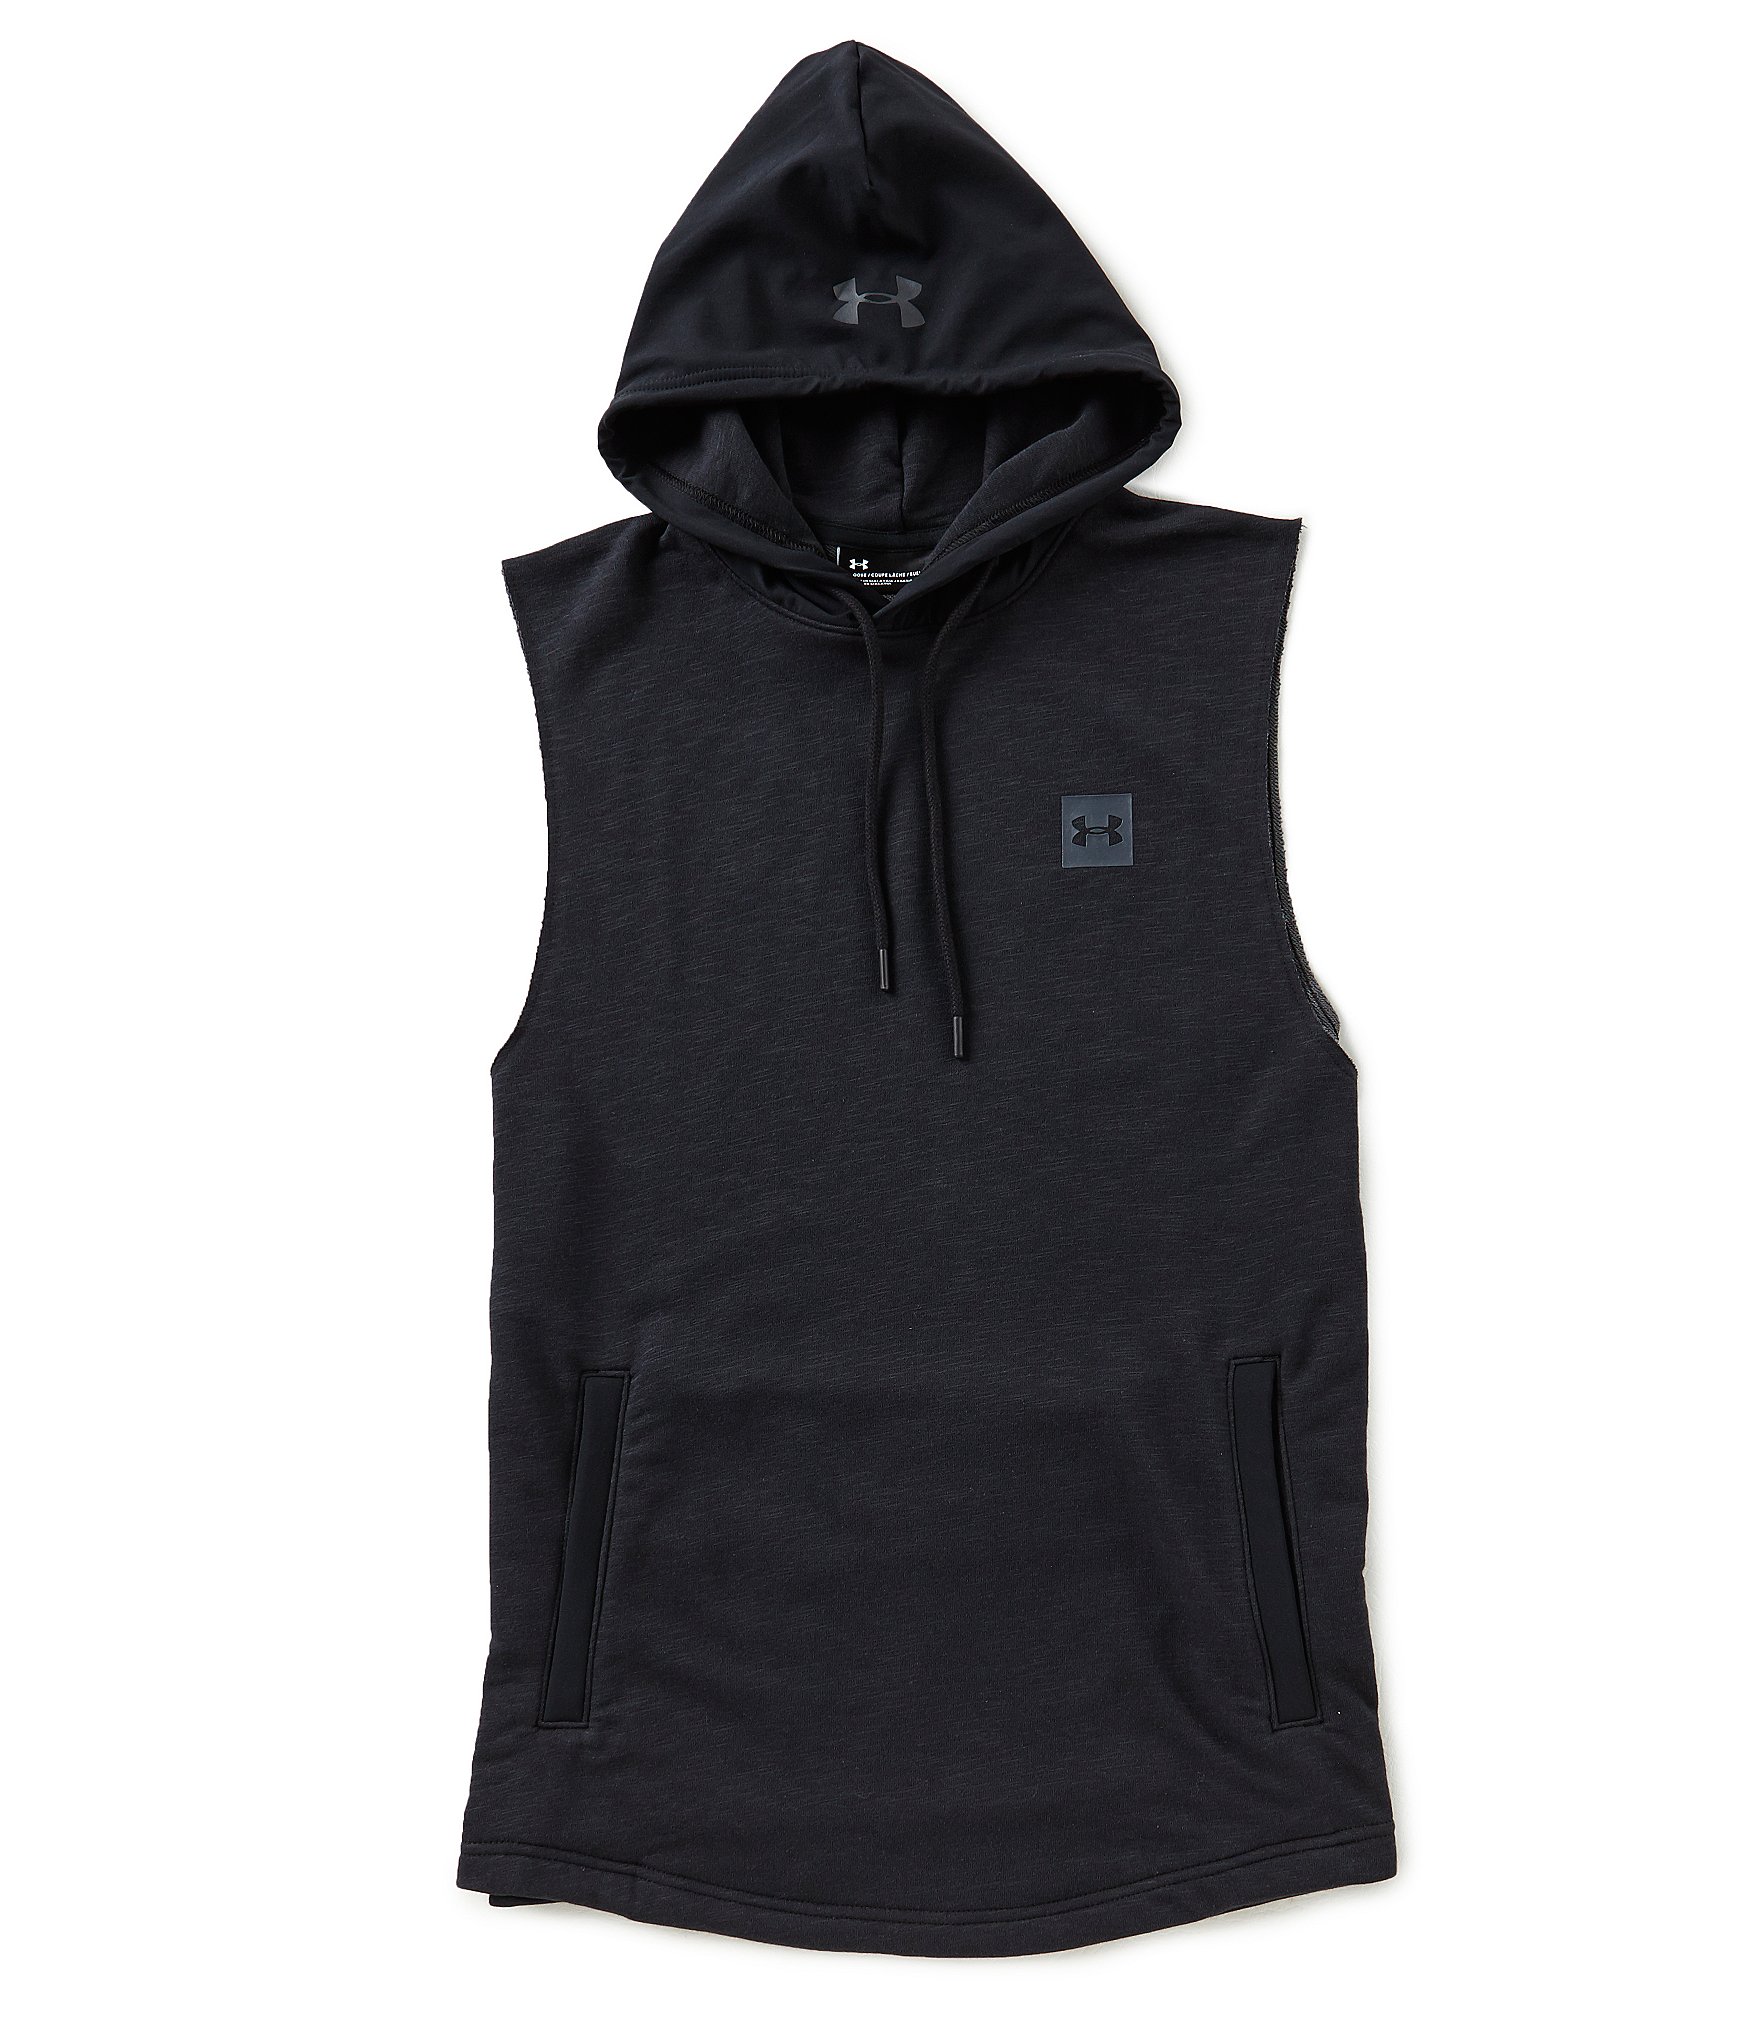 Cheap under armor sleeveless hoodie Buy 